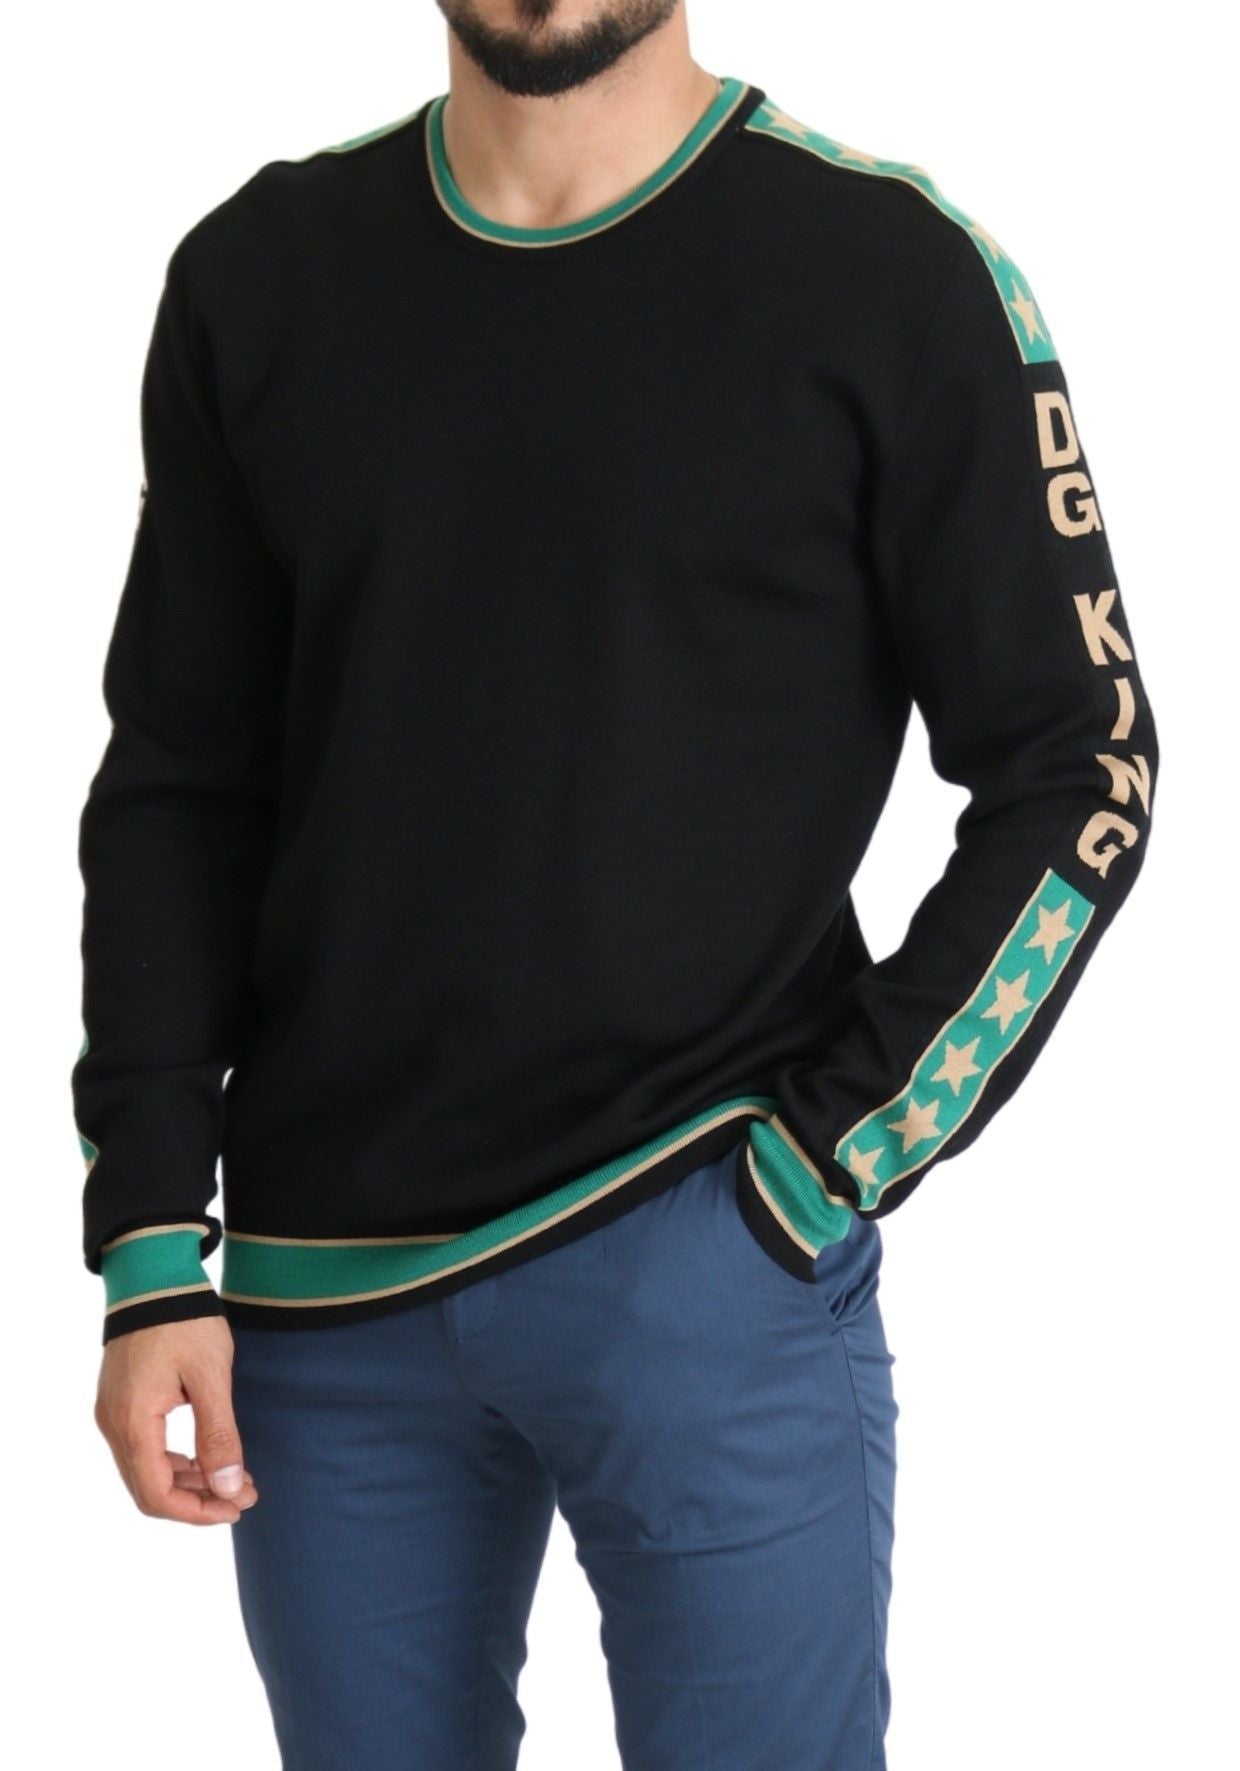 Black Knit Logo Wool Blend Pullover Crew Sweater